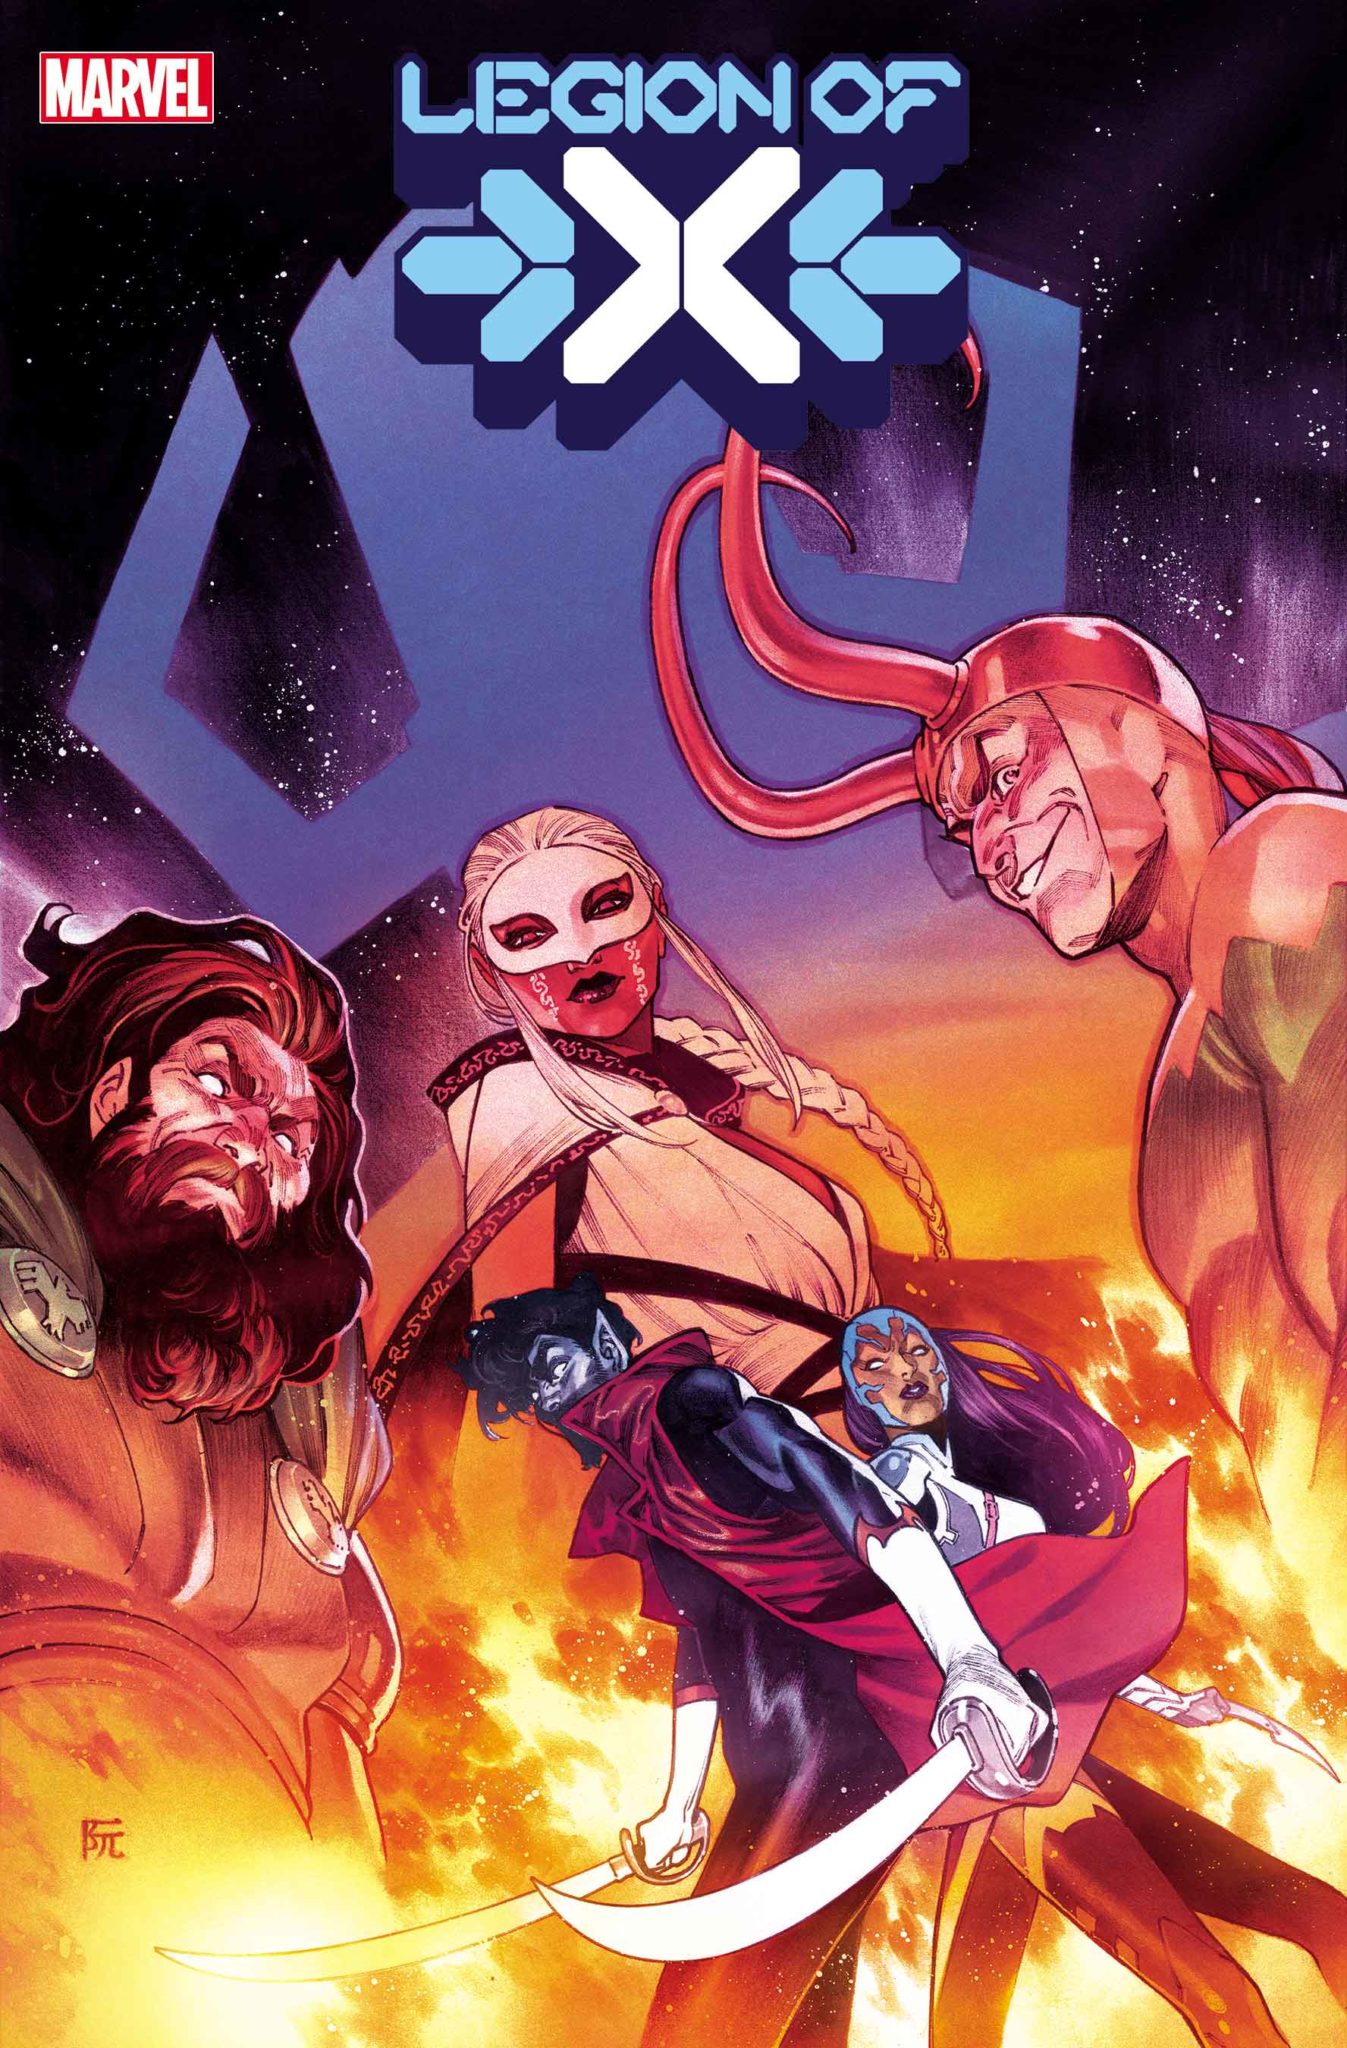 Legion of X #3 cover